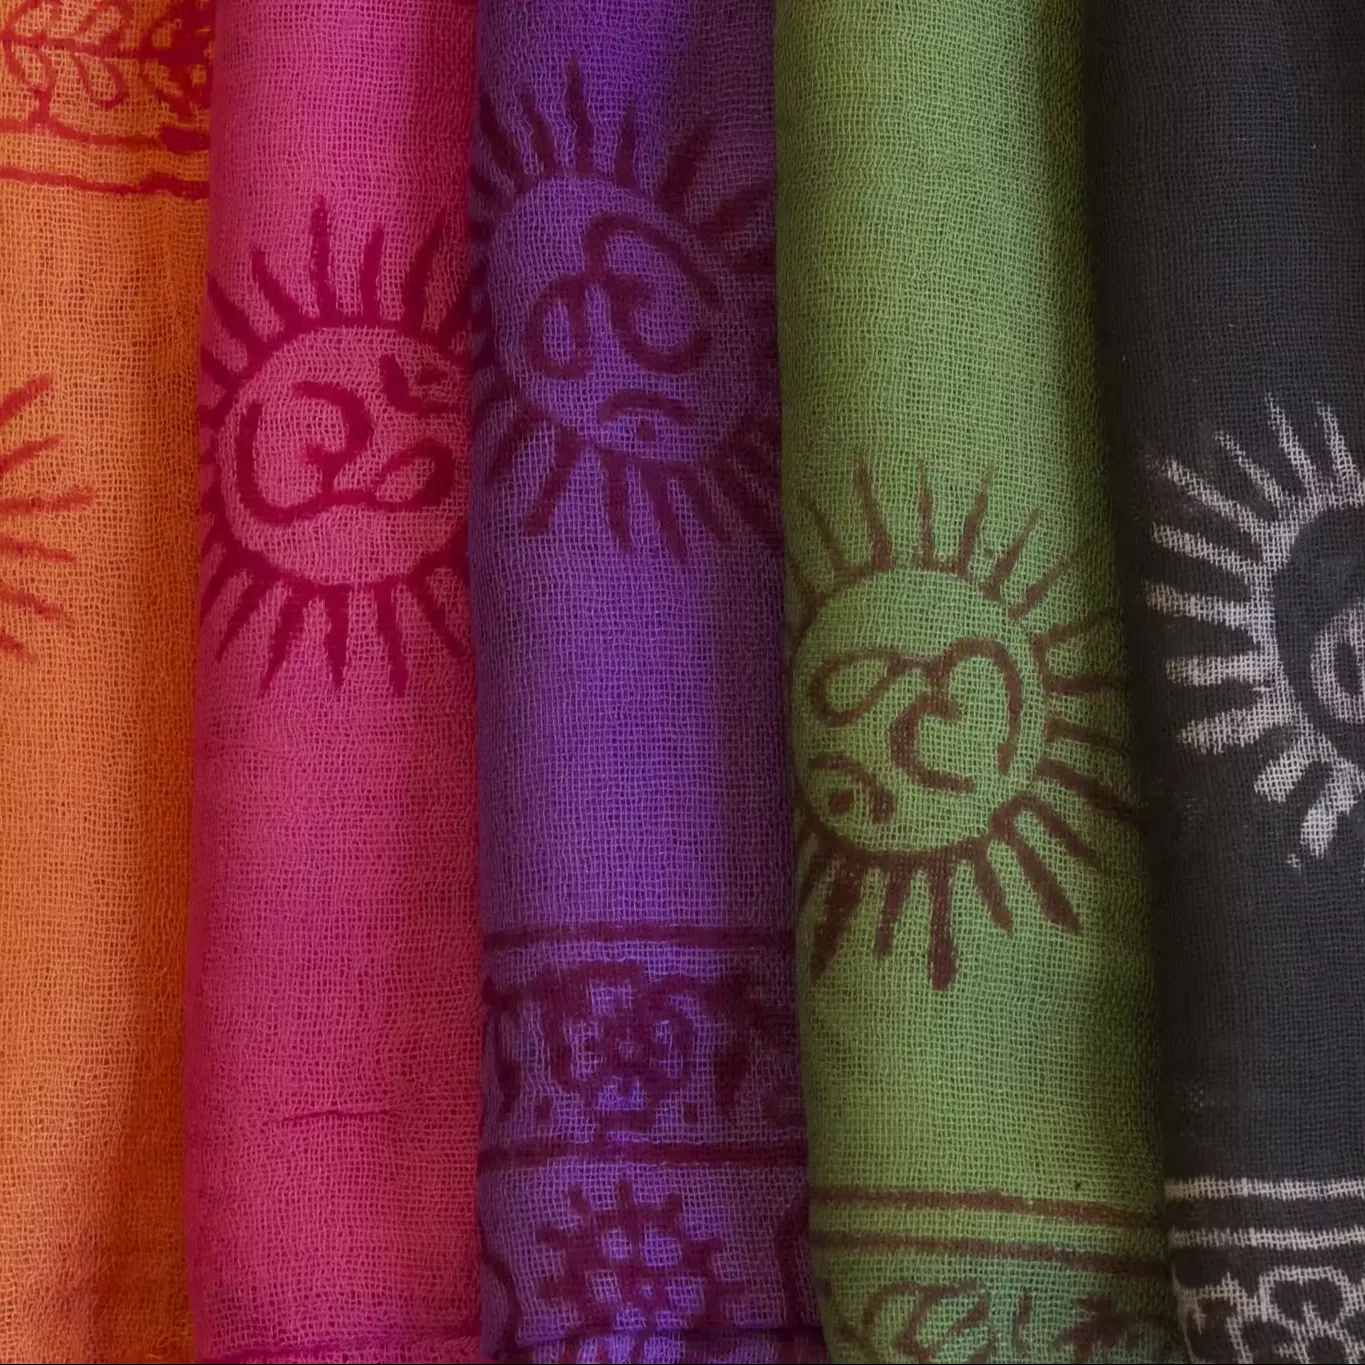 Indian God Printed Shawls Scarves For Yoga Meditation And Beach Wear Sarong